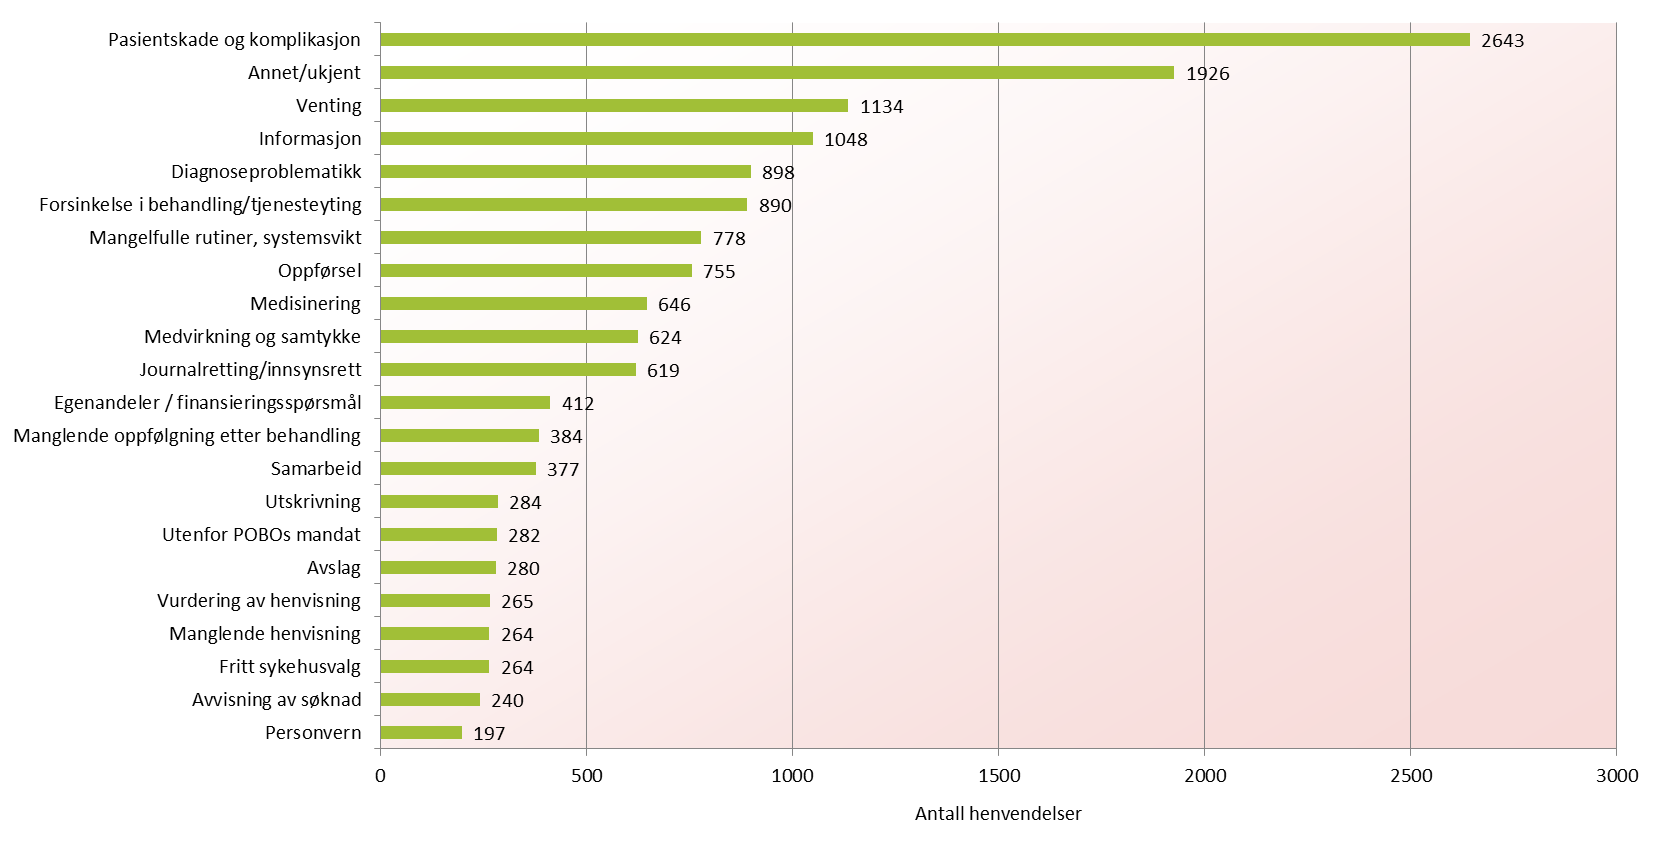 Figur 2 Antall henvendelser per tjenesteområde. 2003-2013 (minus 2012).